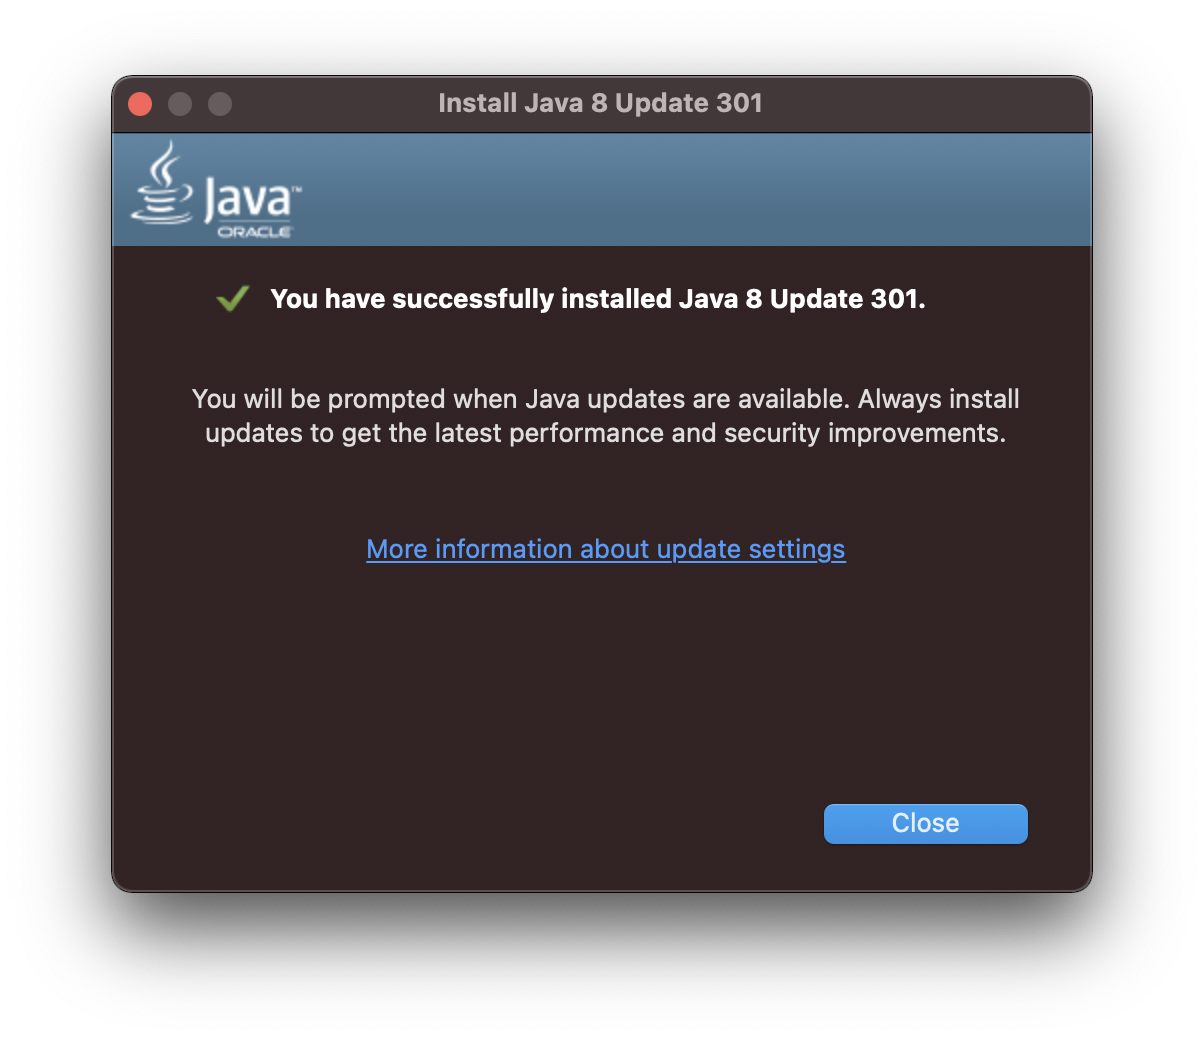 Install Java 8 Update 301